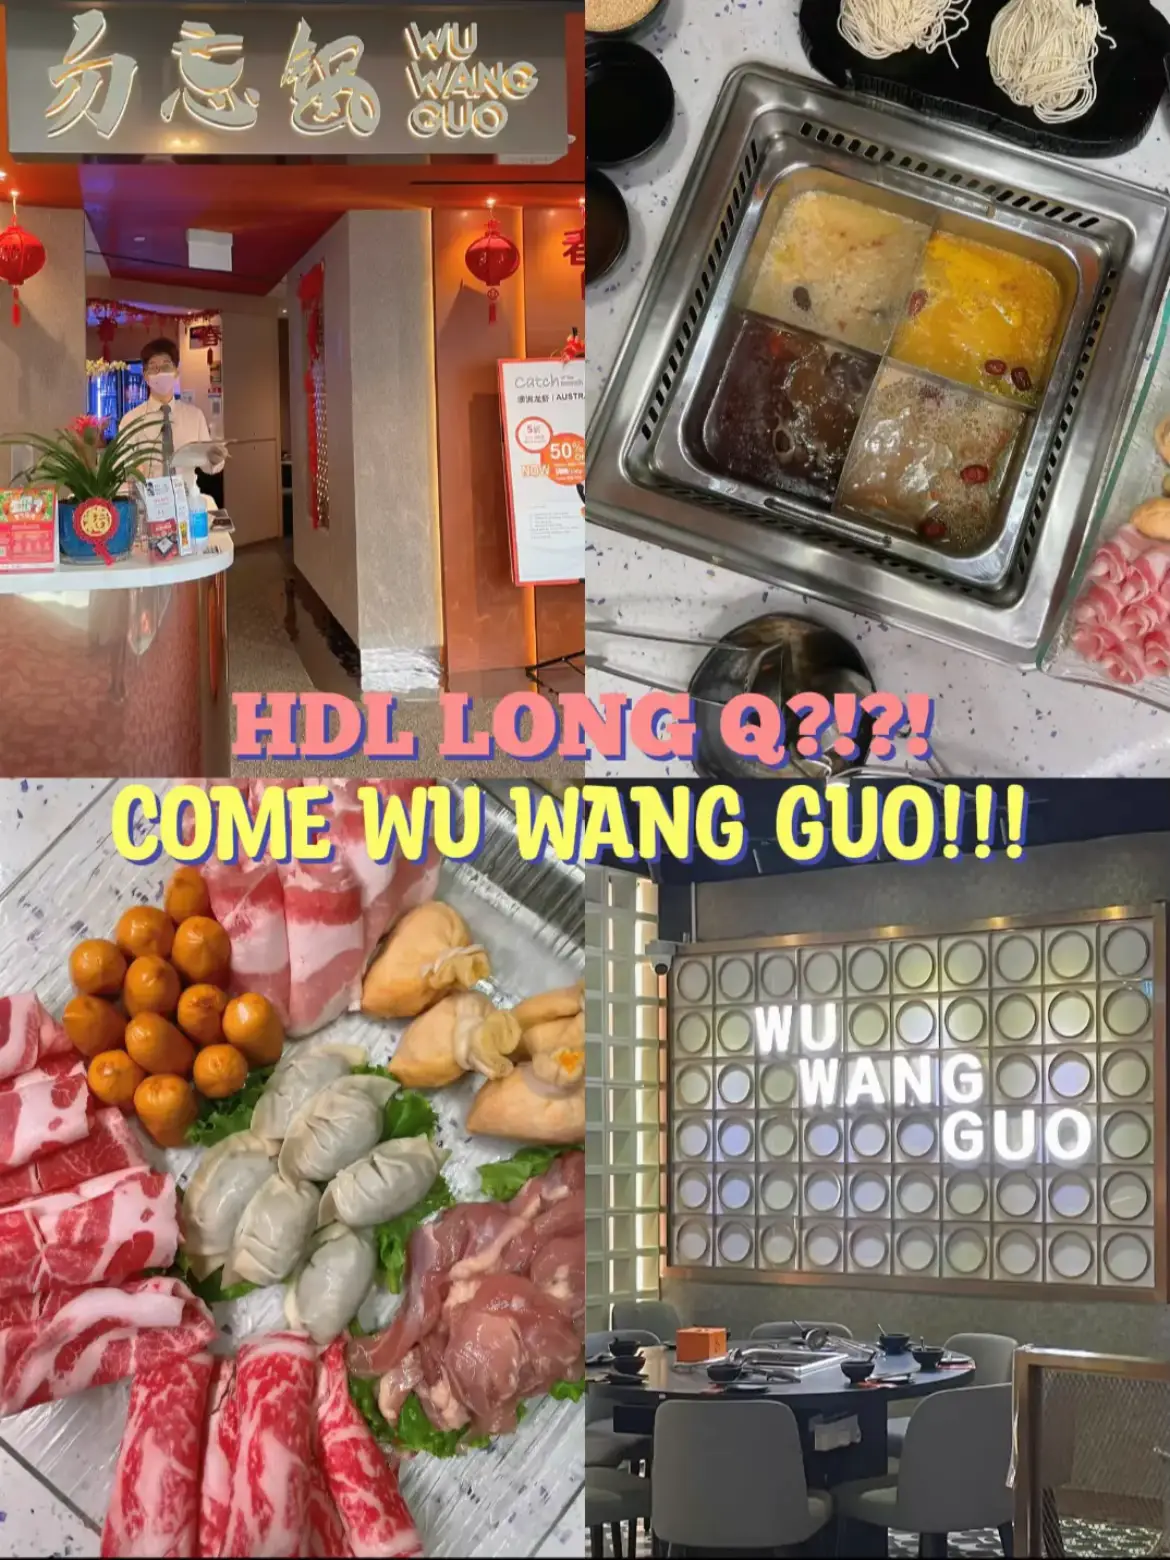 Ice Cream Promotion at Wu Wang Guo - Lemon8 Search